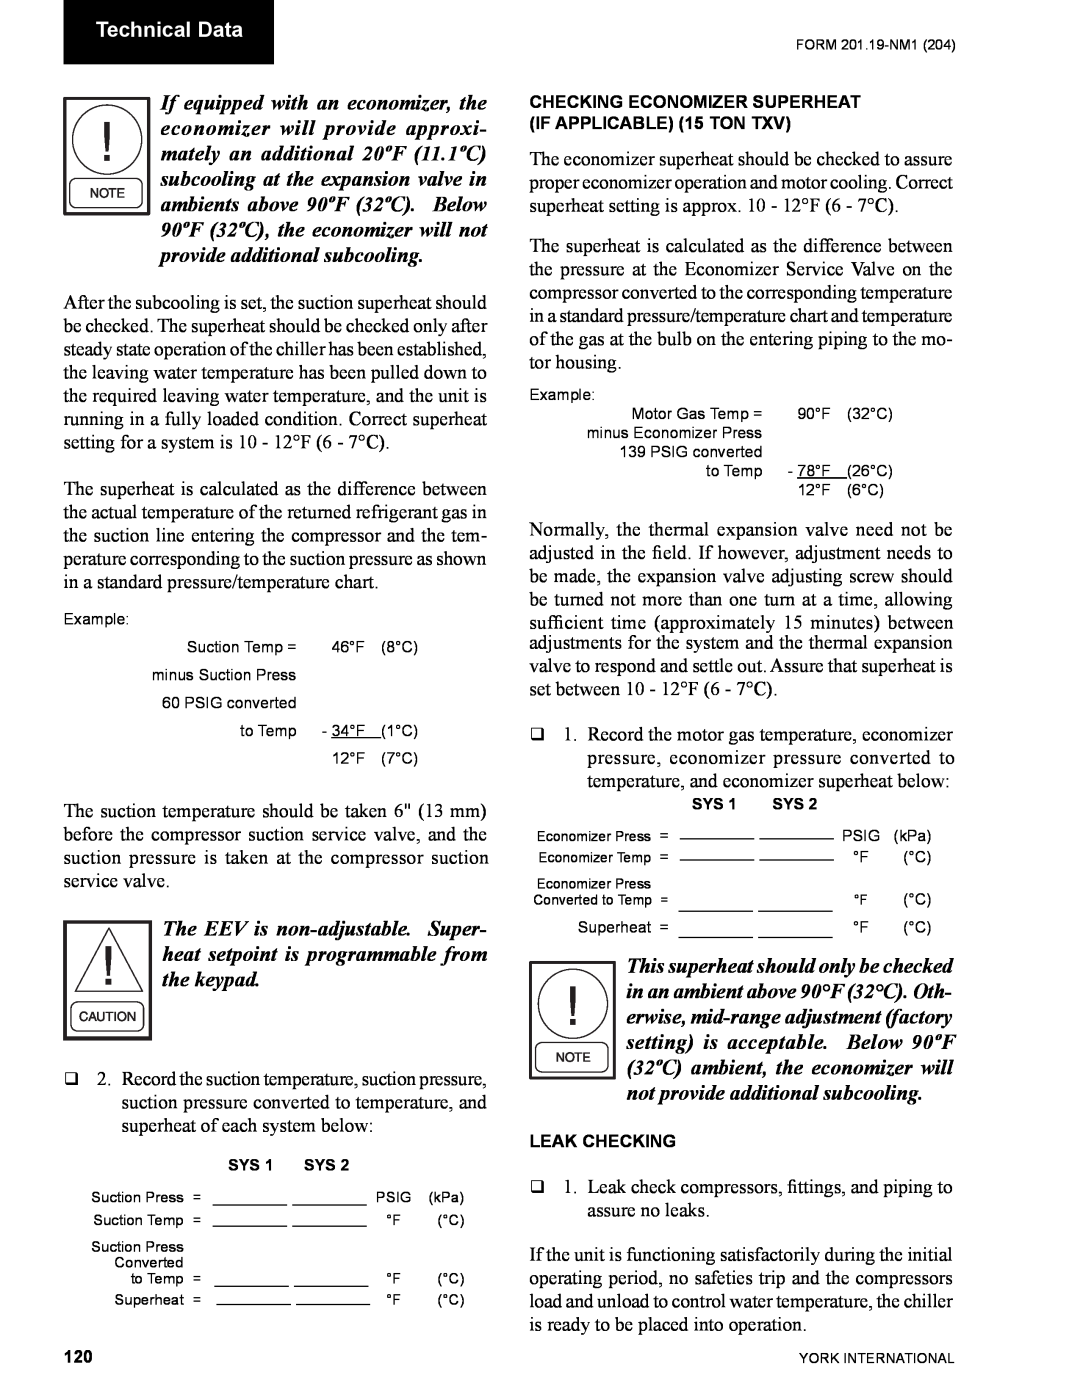 York YCAS0130 manual Technical Data, temperature, and economizer superheat below 